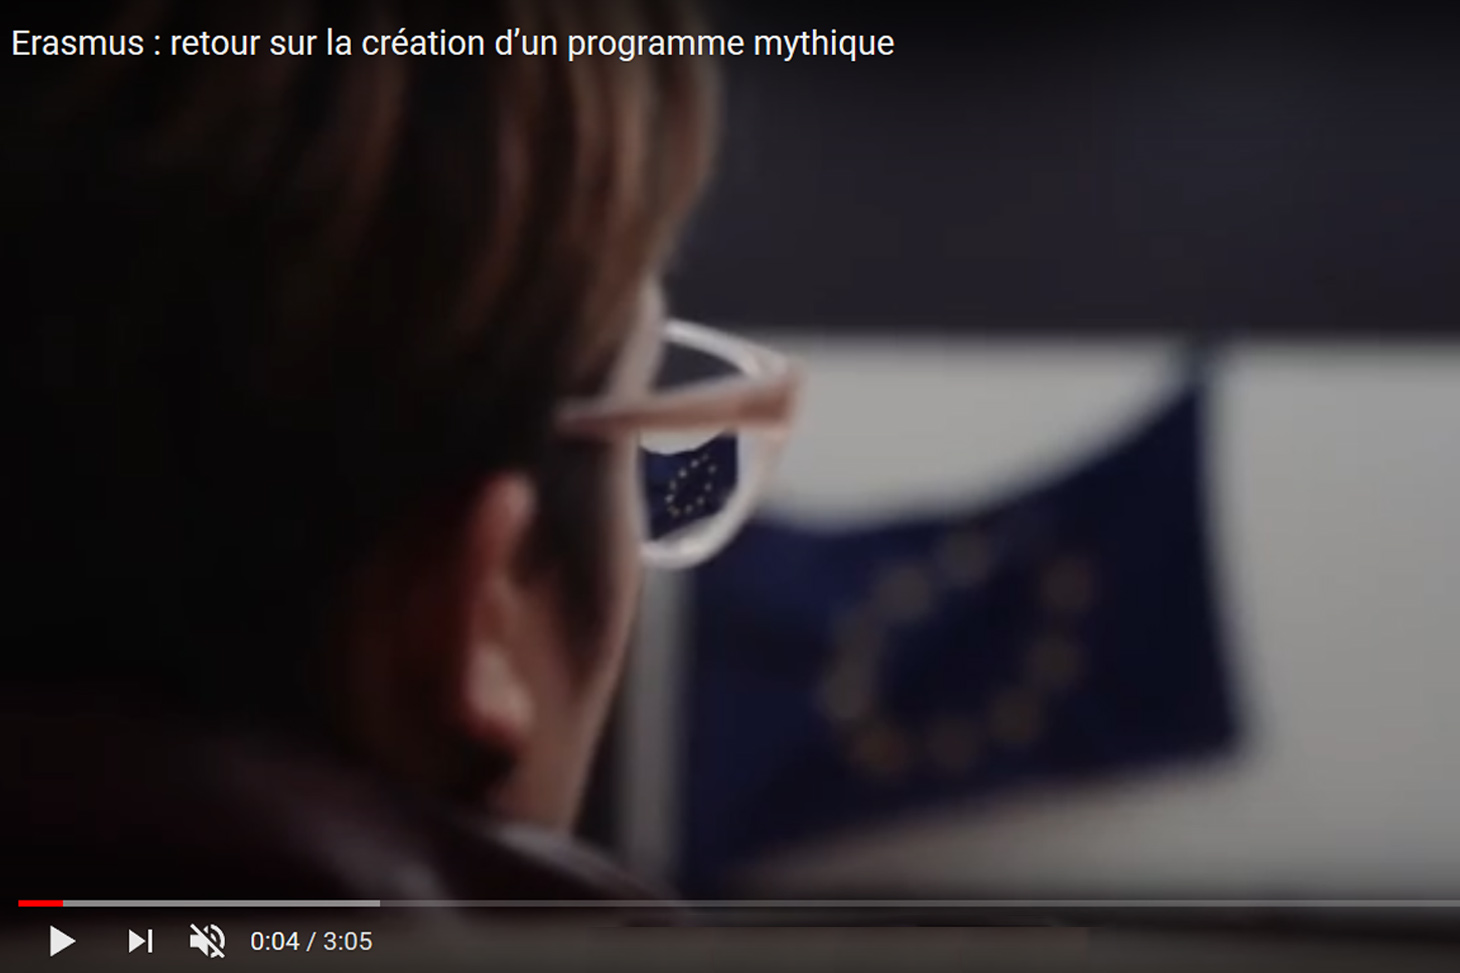 Erasmus, photo du film de Pierre Reynard sur la création de ce programme